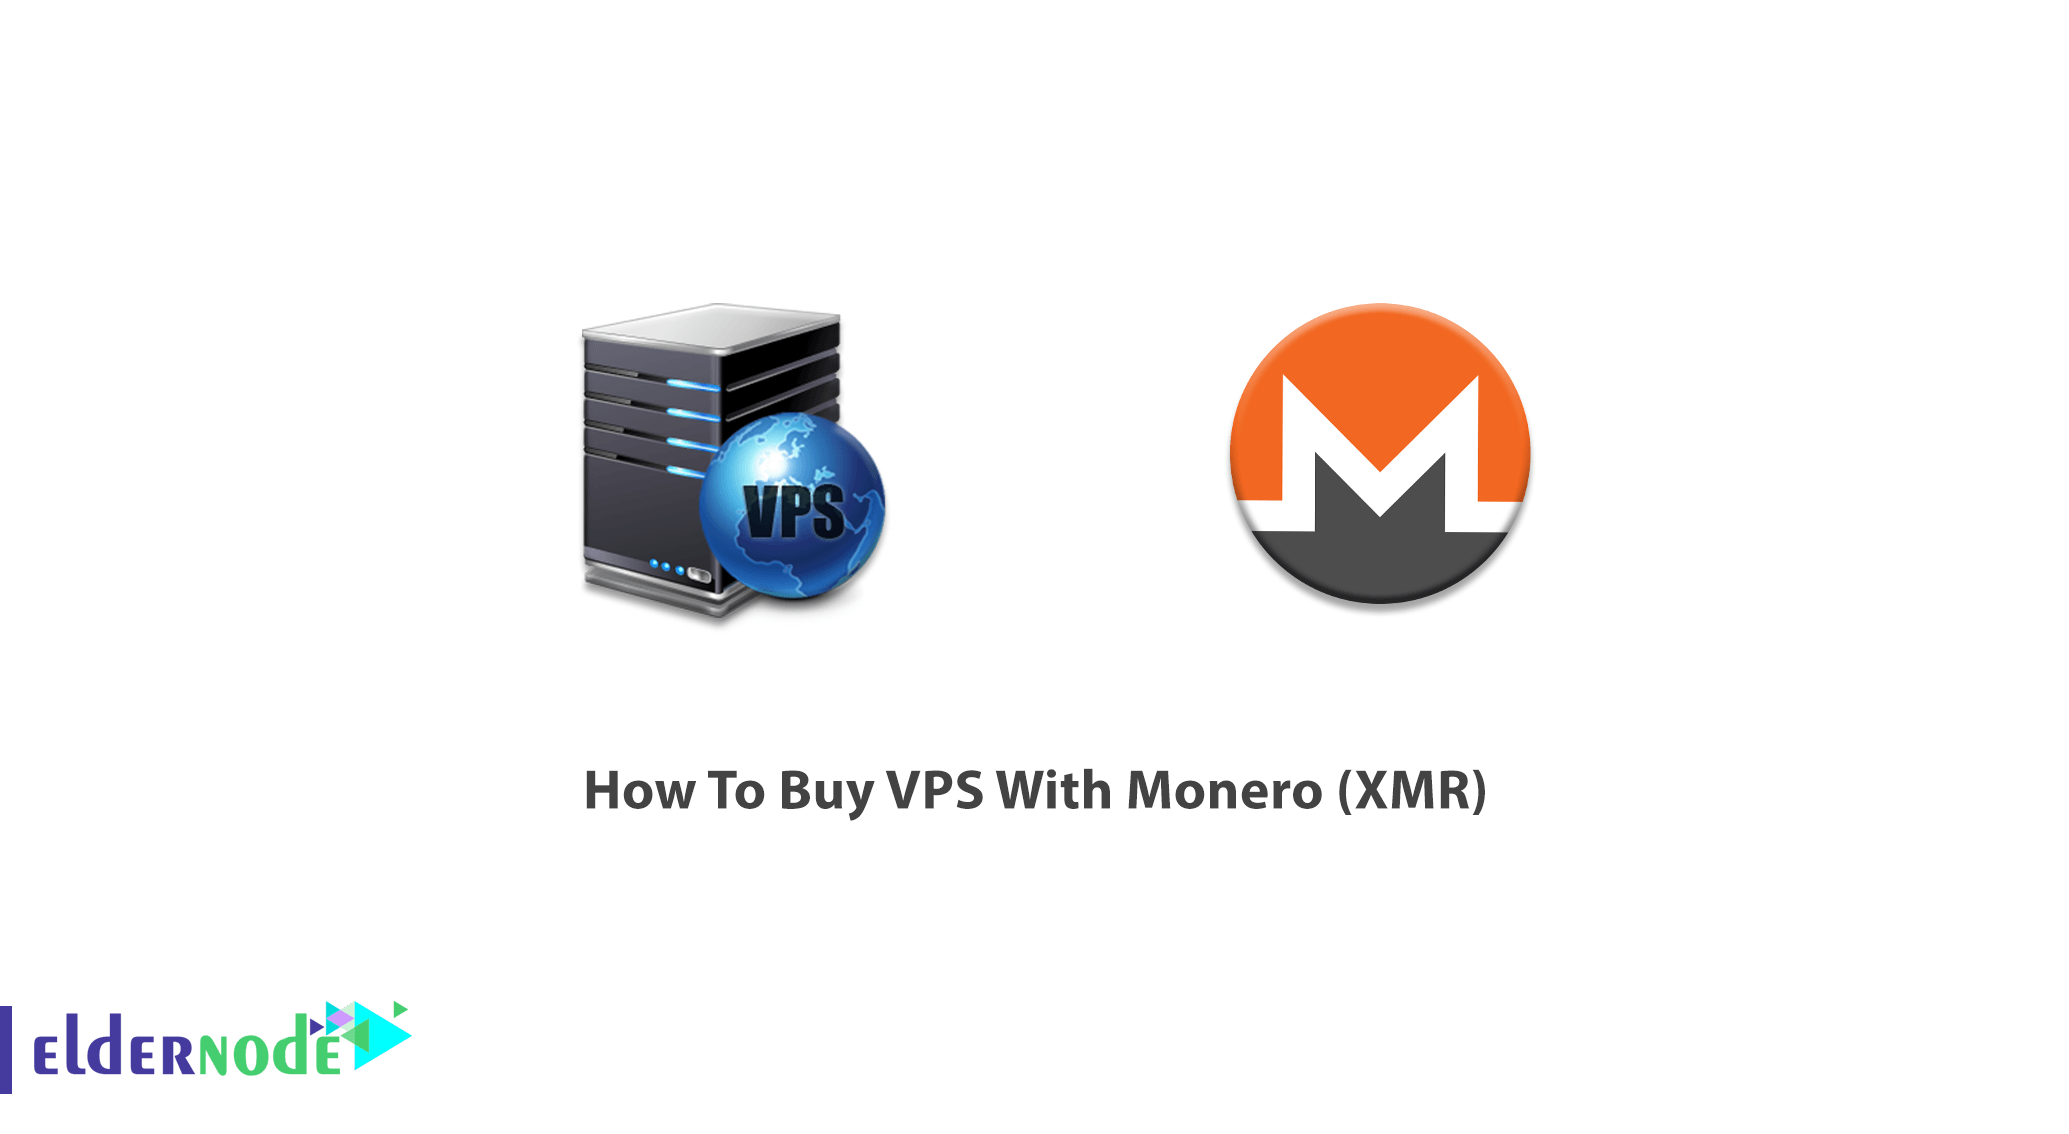 How To Buy VPS With Monero (XMR)